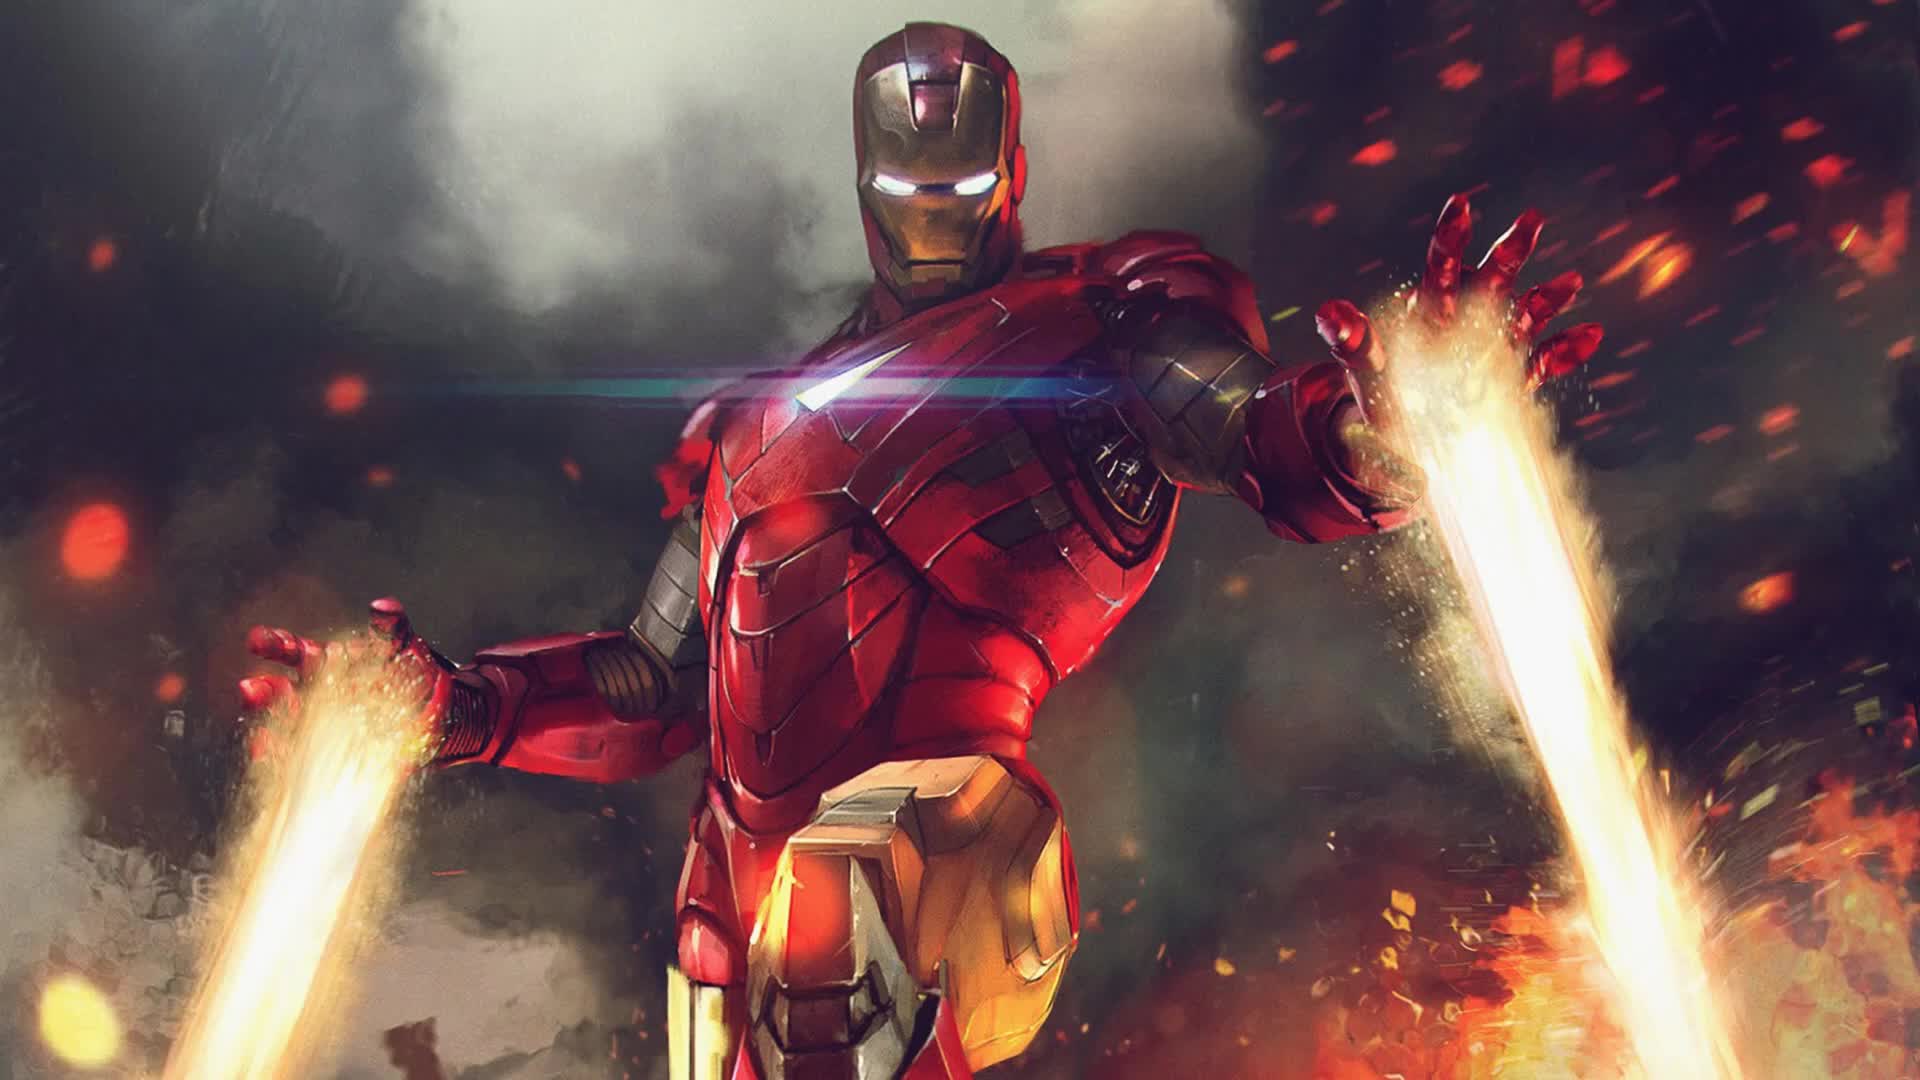 Iron Man Superheroes Marvel War Of Heroes Live Wallpaper Every Journey Has An End Iron Man 19x1080 Wallpaper Teahub Io